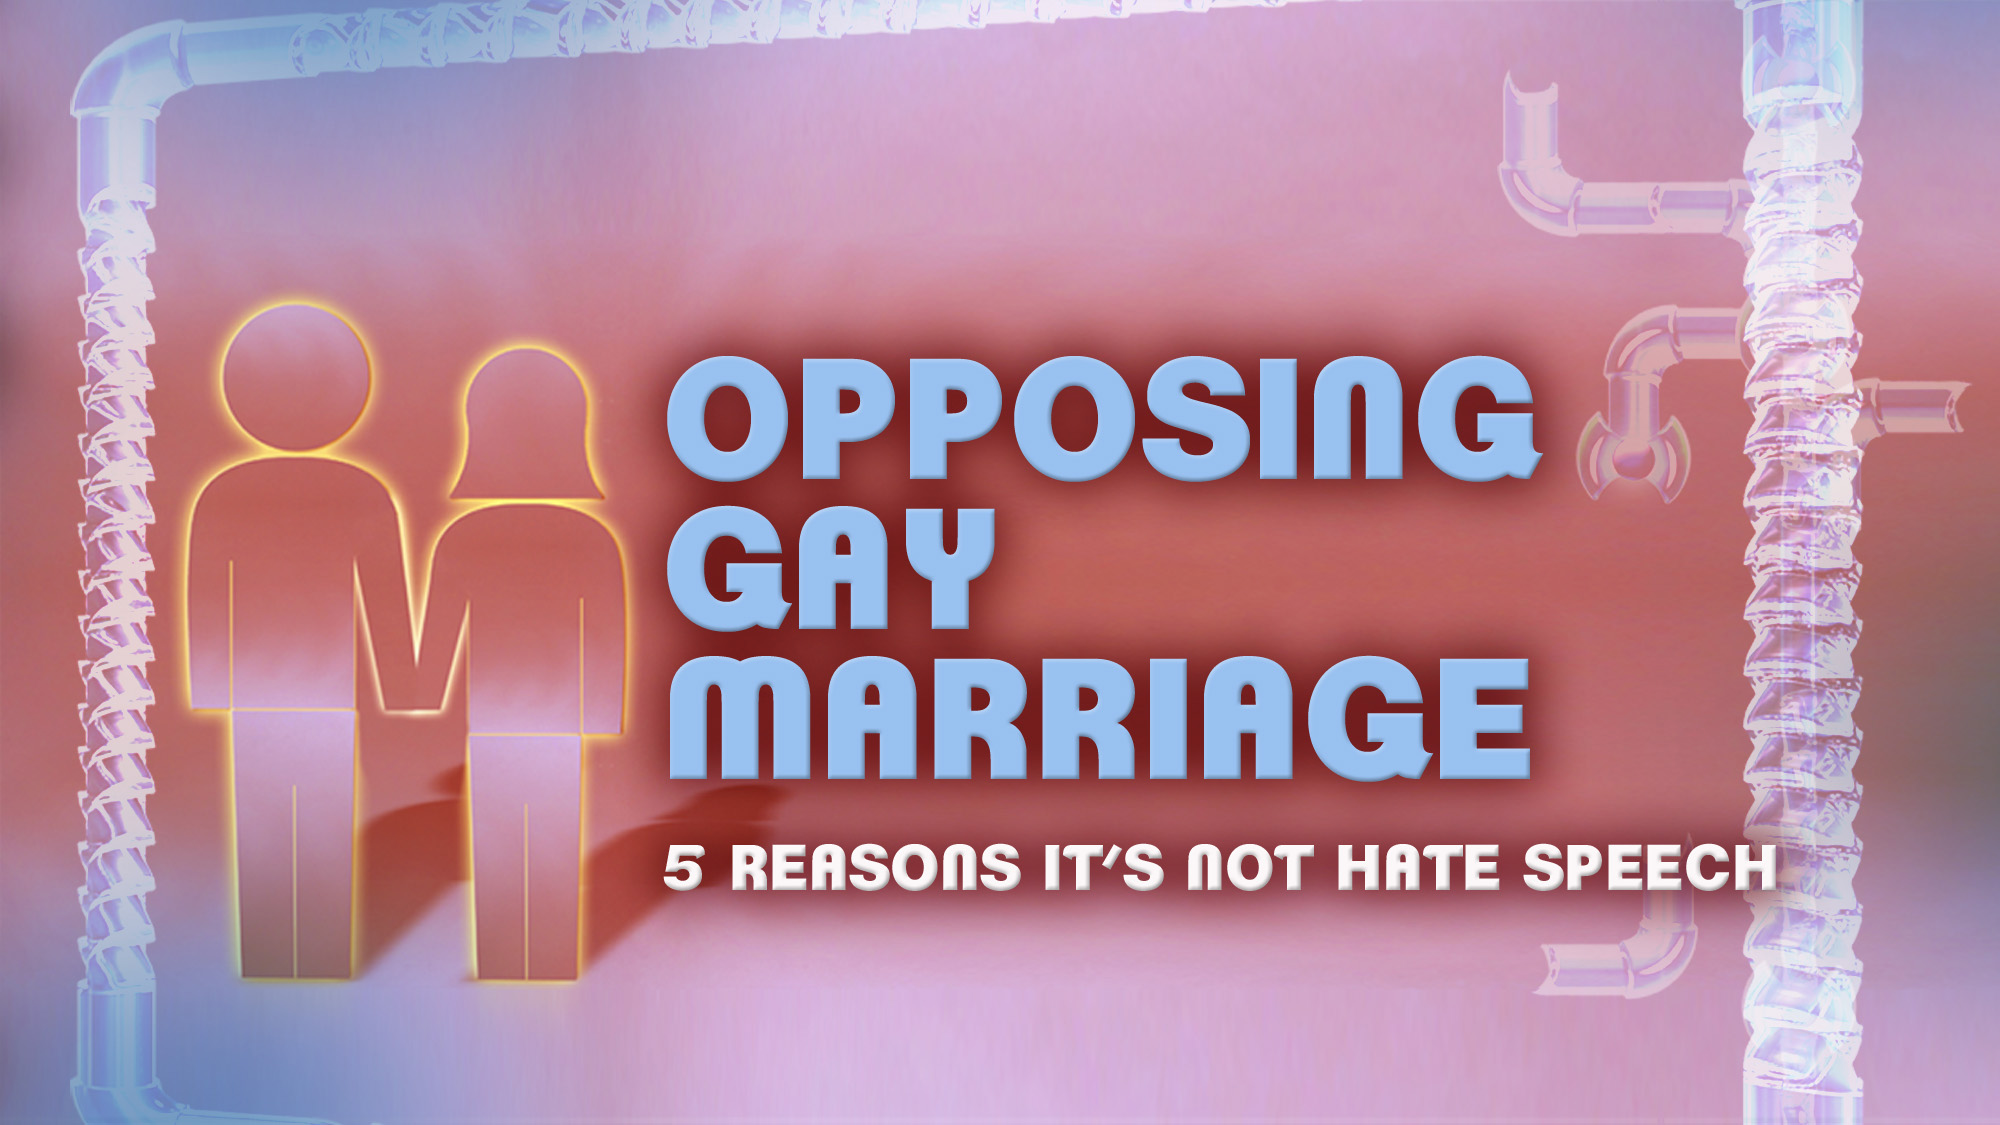 OPPOSING GAY MARRIAGE 5 REASONS NOT HATE SPEECH1